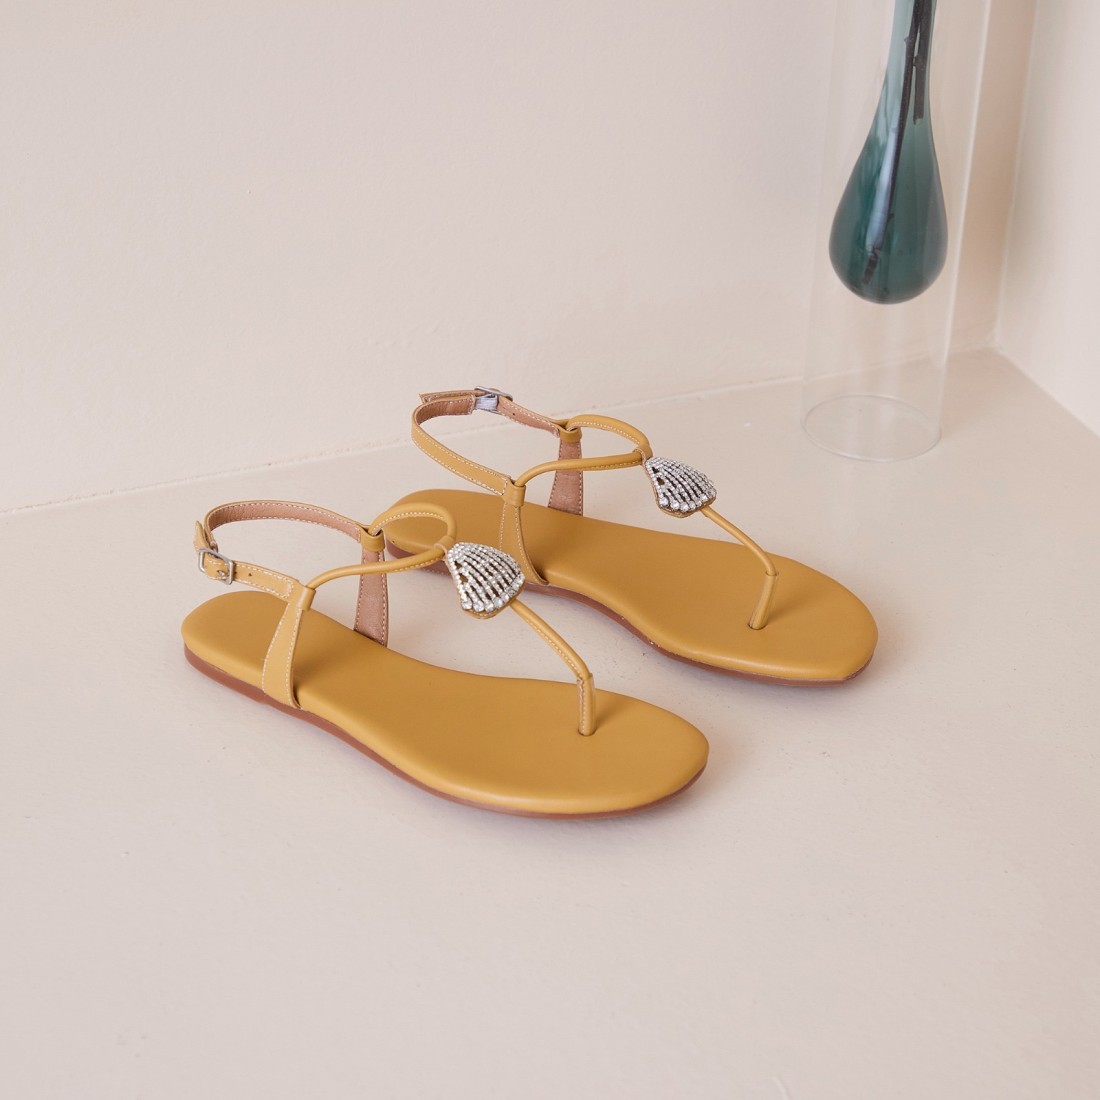 Petite Size Beach Sandals | Flip Flop | Small Feet Shoes